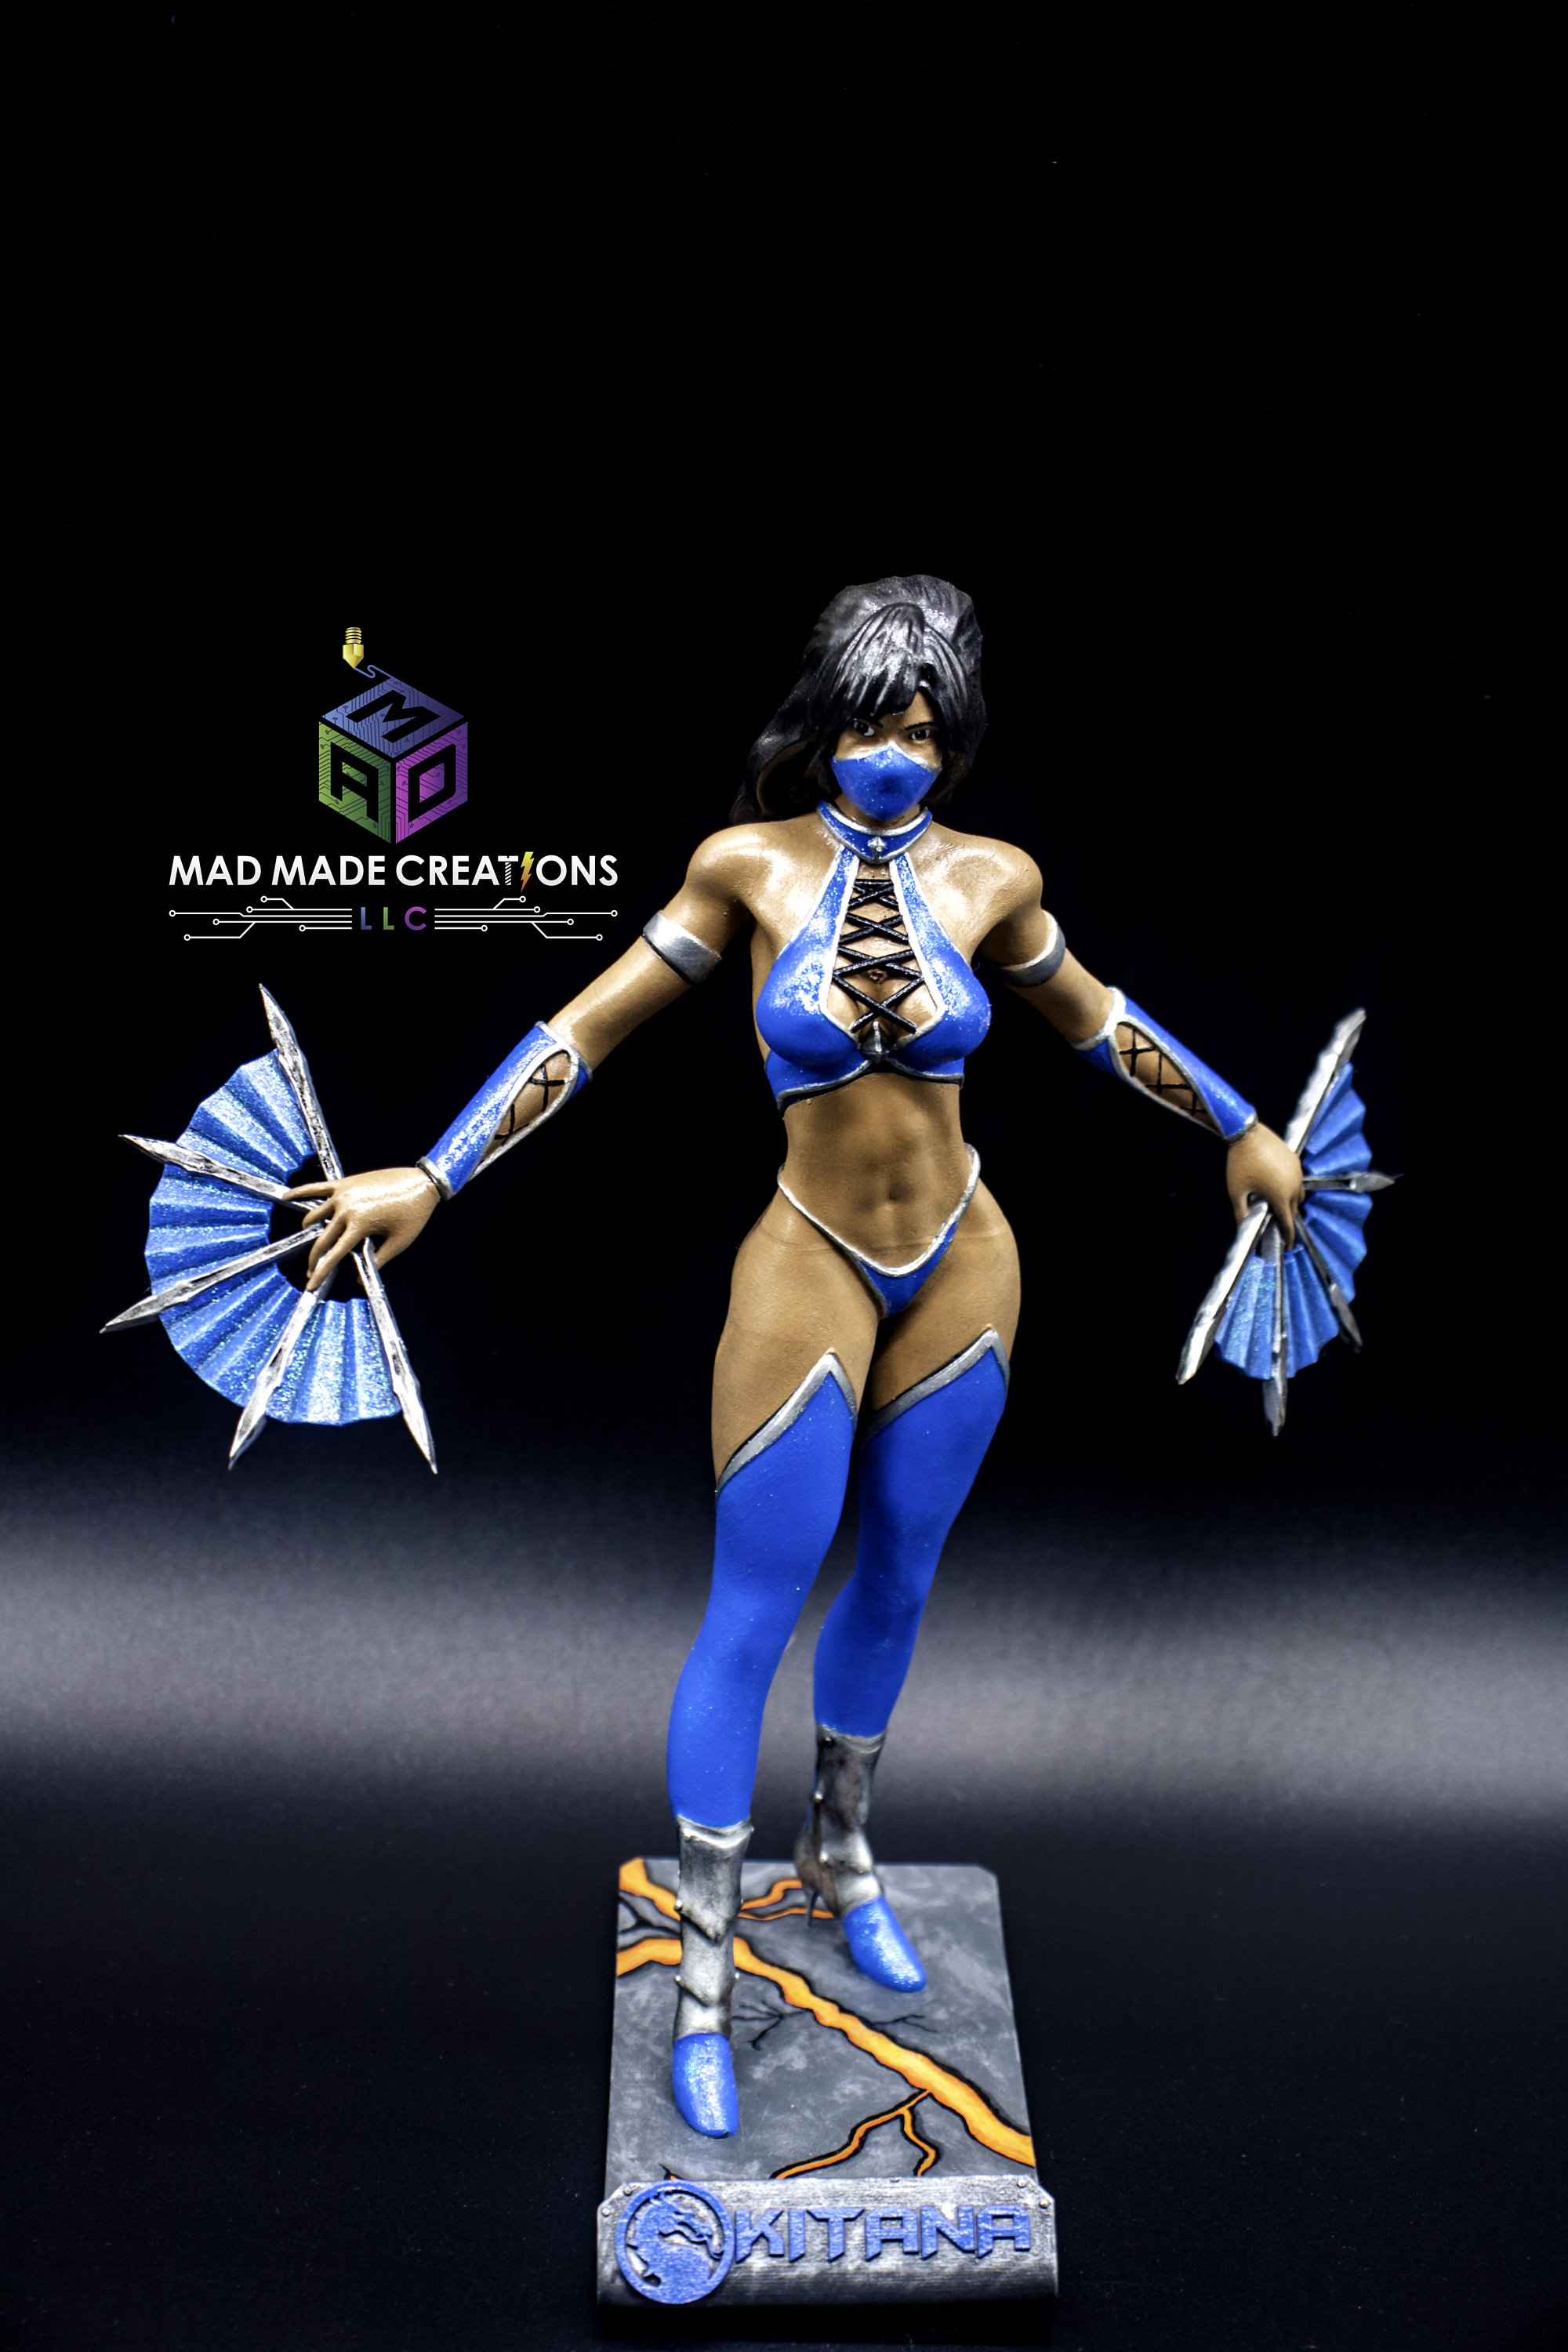 Paper-Rock papercraft - Martillo de Shao Kahn en Mortal Kombat. Medida: 60  cm ideal para cosplay  seccion  de modelos con dificultad media